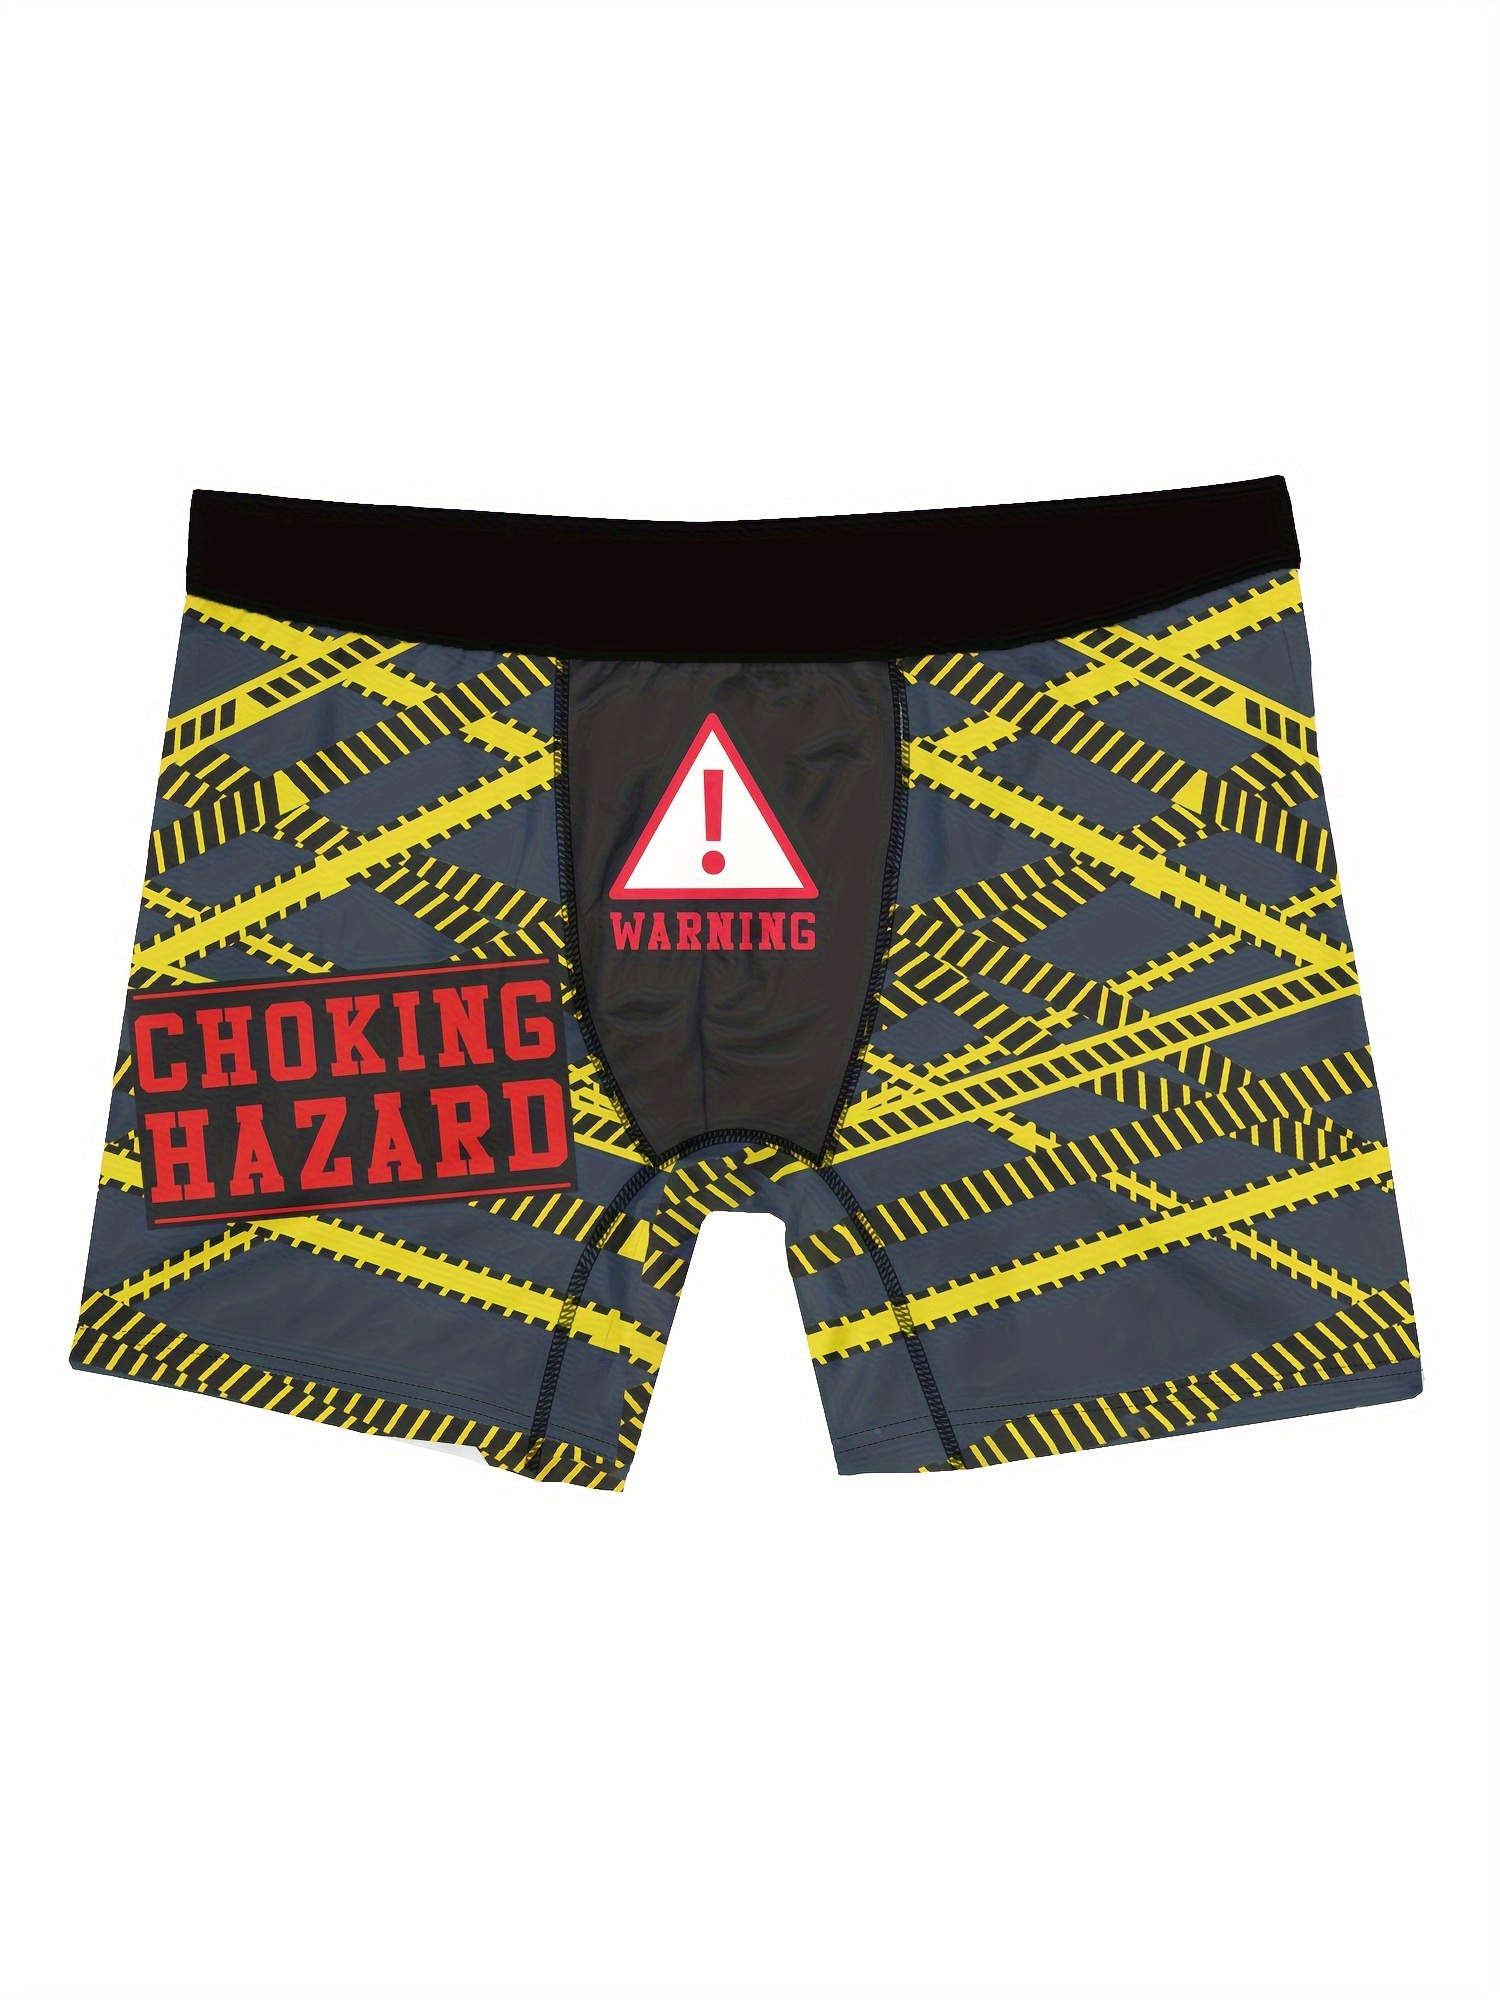 Men's Choking Hazard Warning Print Fashion Novelty Boxer Briefs Shorts,  Breathable Comfy High Stretch Boxer Trunks, Men's Underwear